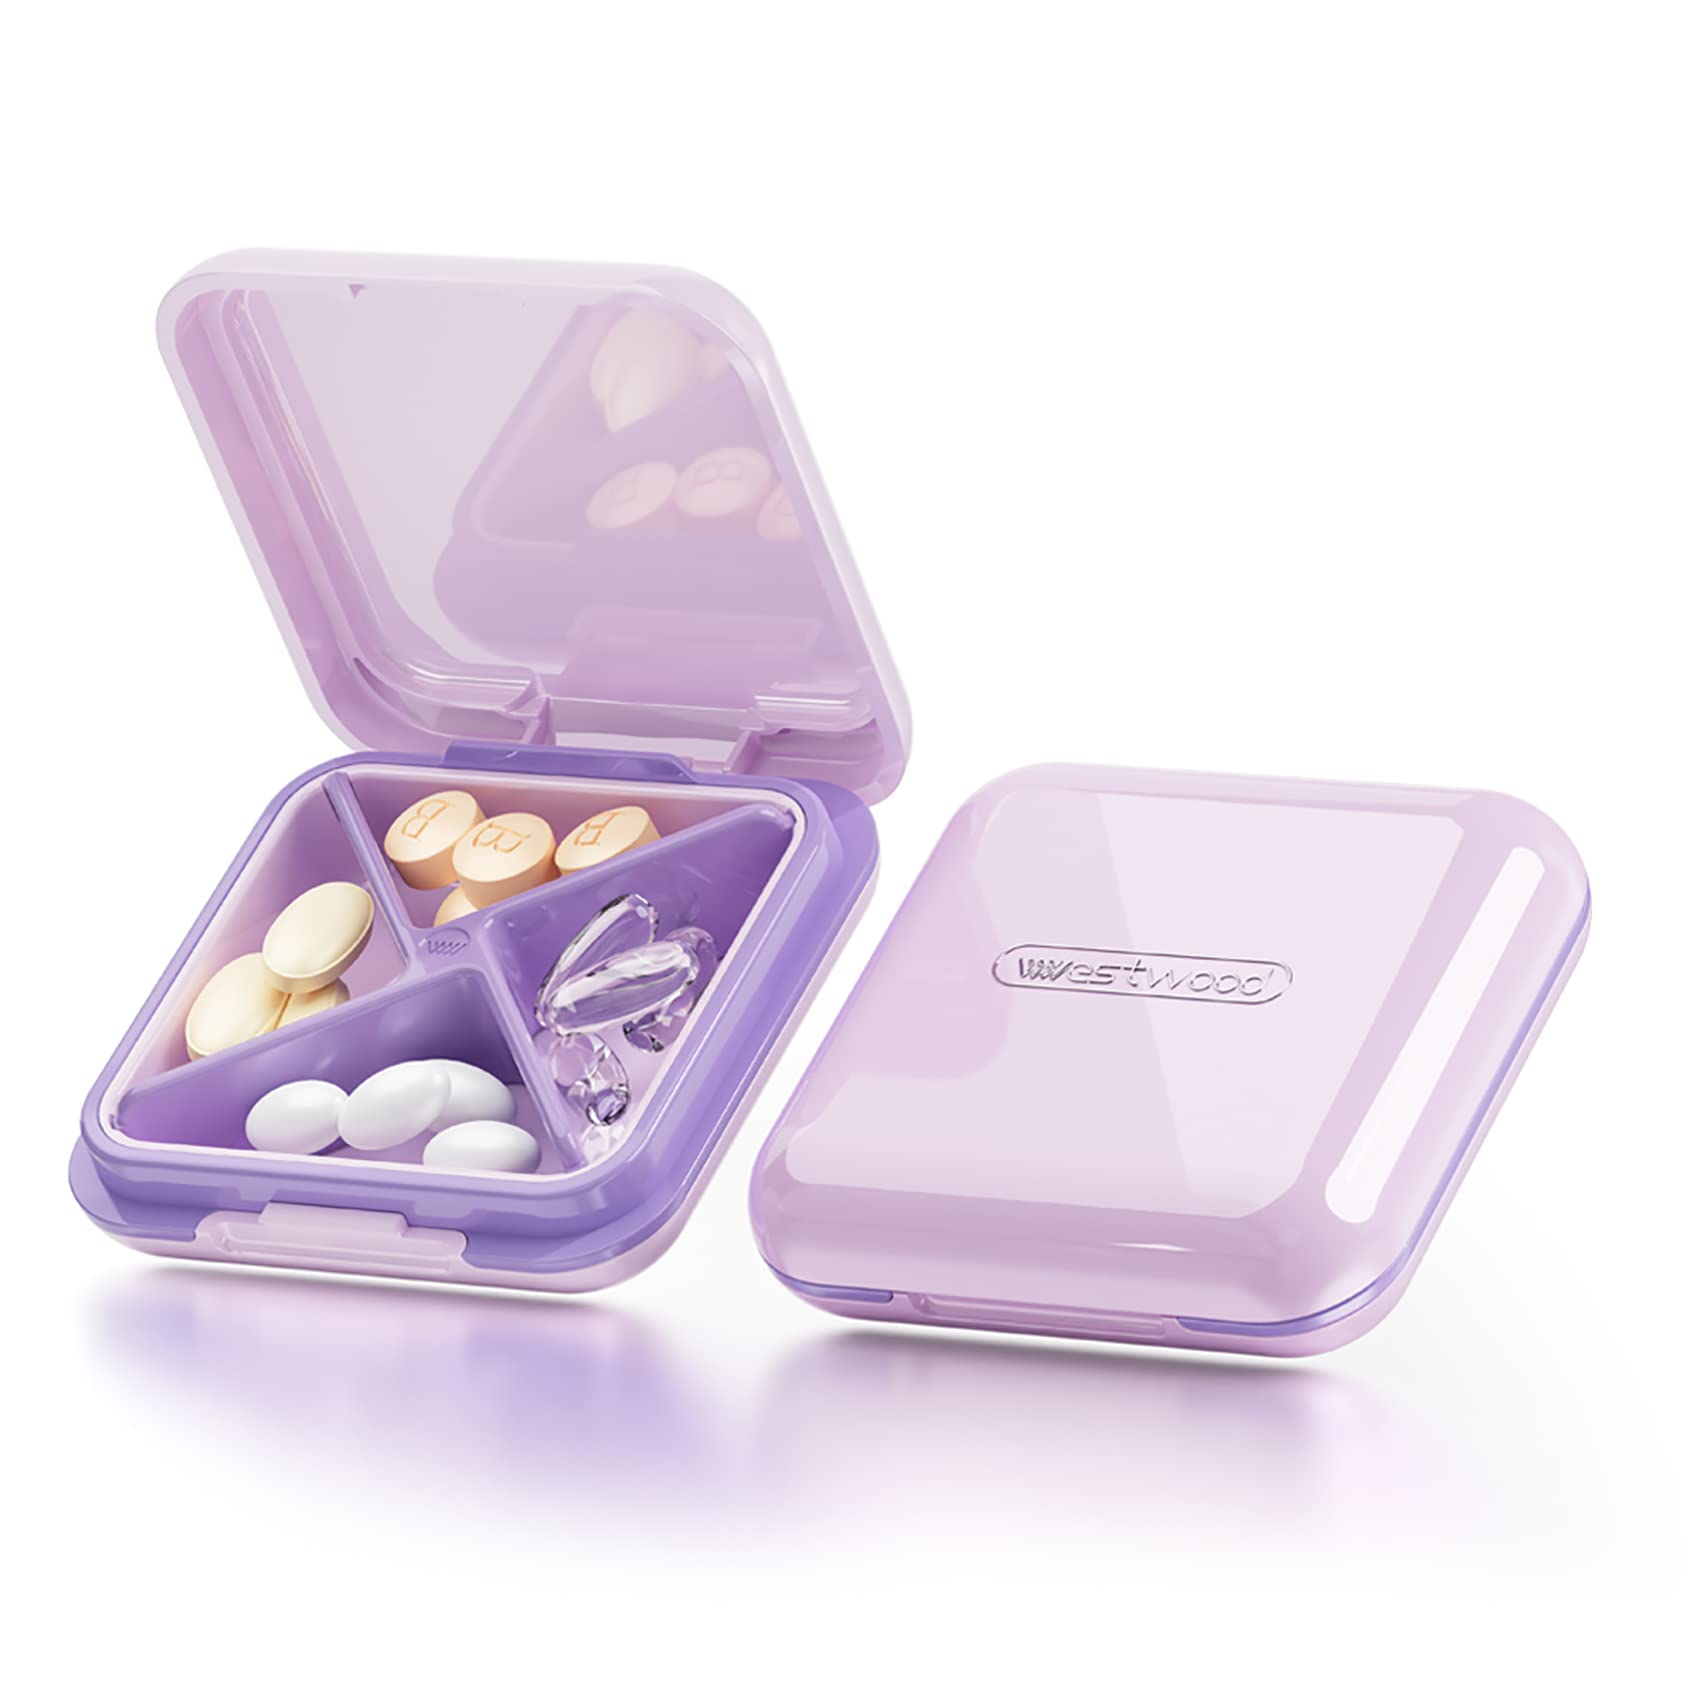 dubstar DUBSTAR Pill Case,Small Pill Box - Waterproof Portable Daily Small  Pill Case for Purses Pocket Compact Travel Medicine Holder fo